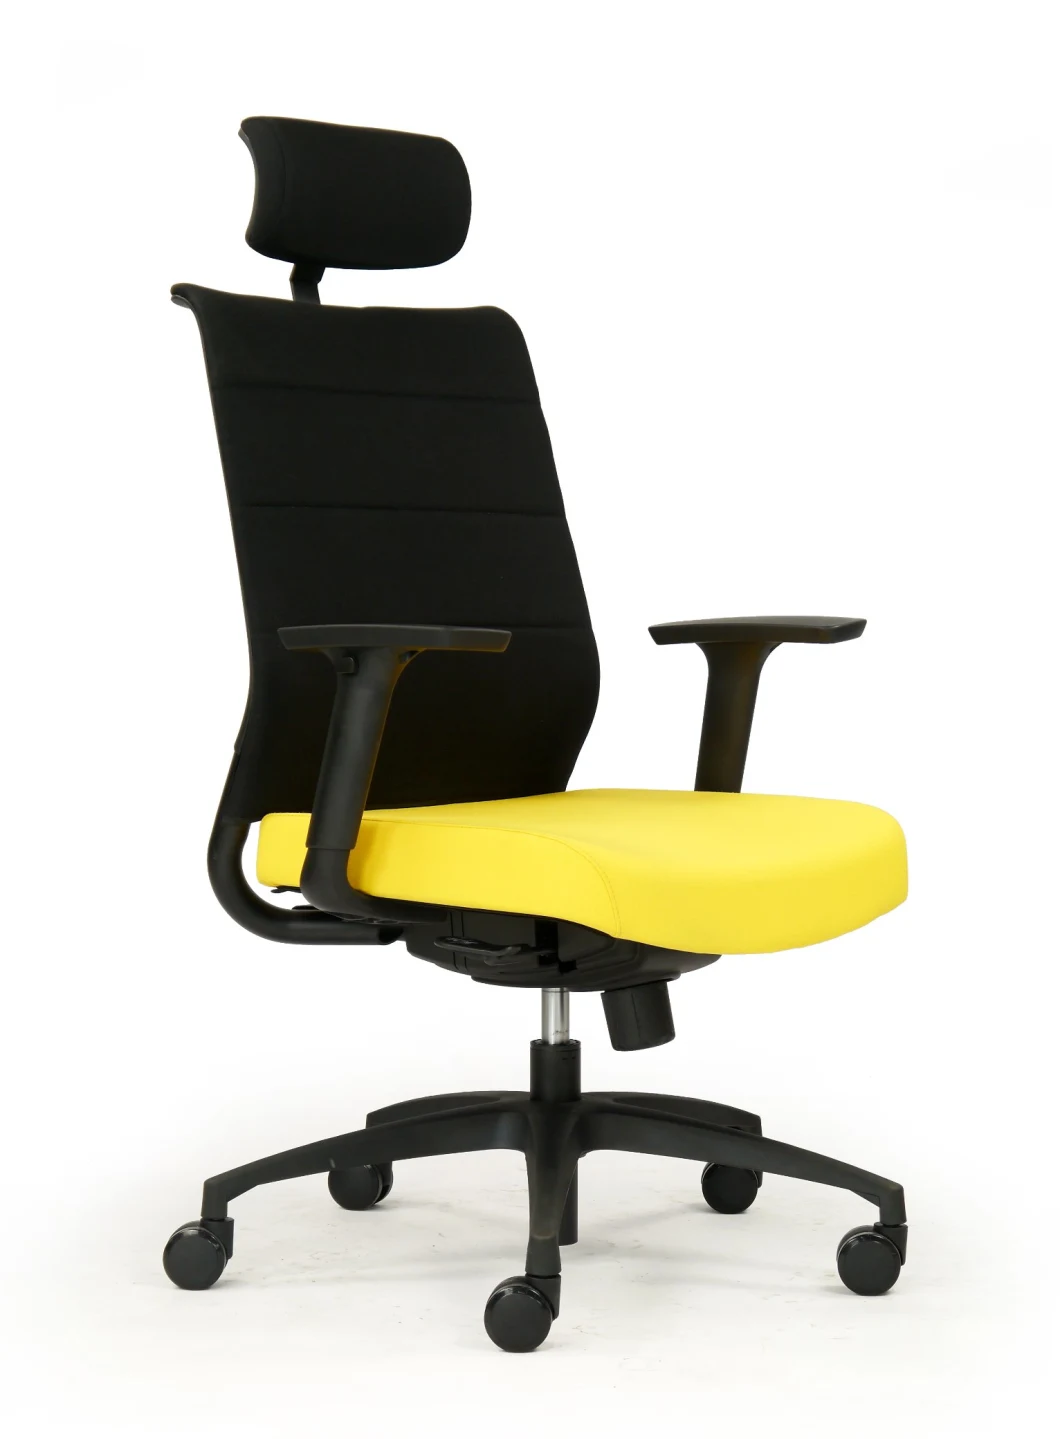 2021 New Design Modern Comfortable Reclining Swivel Office Chair Mesh Adjustable Ergonomic Chairs